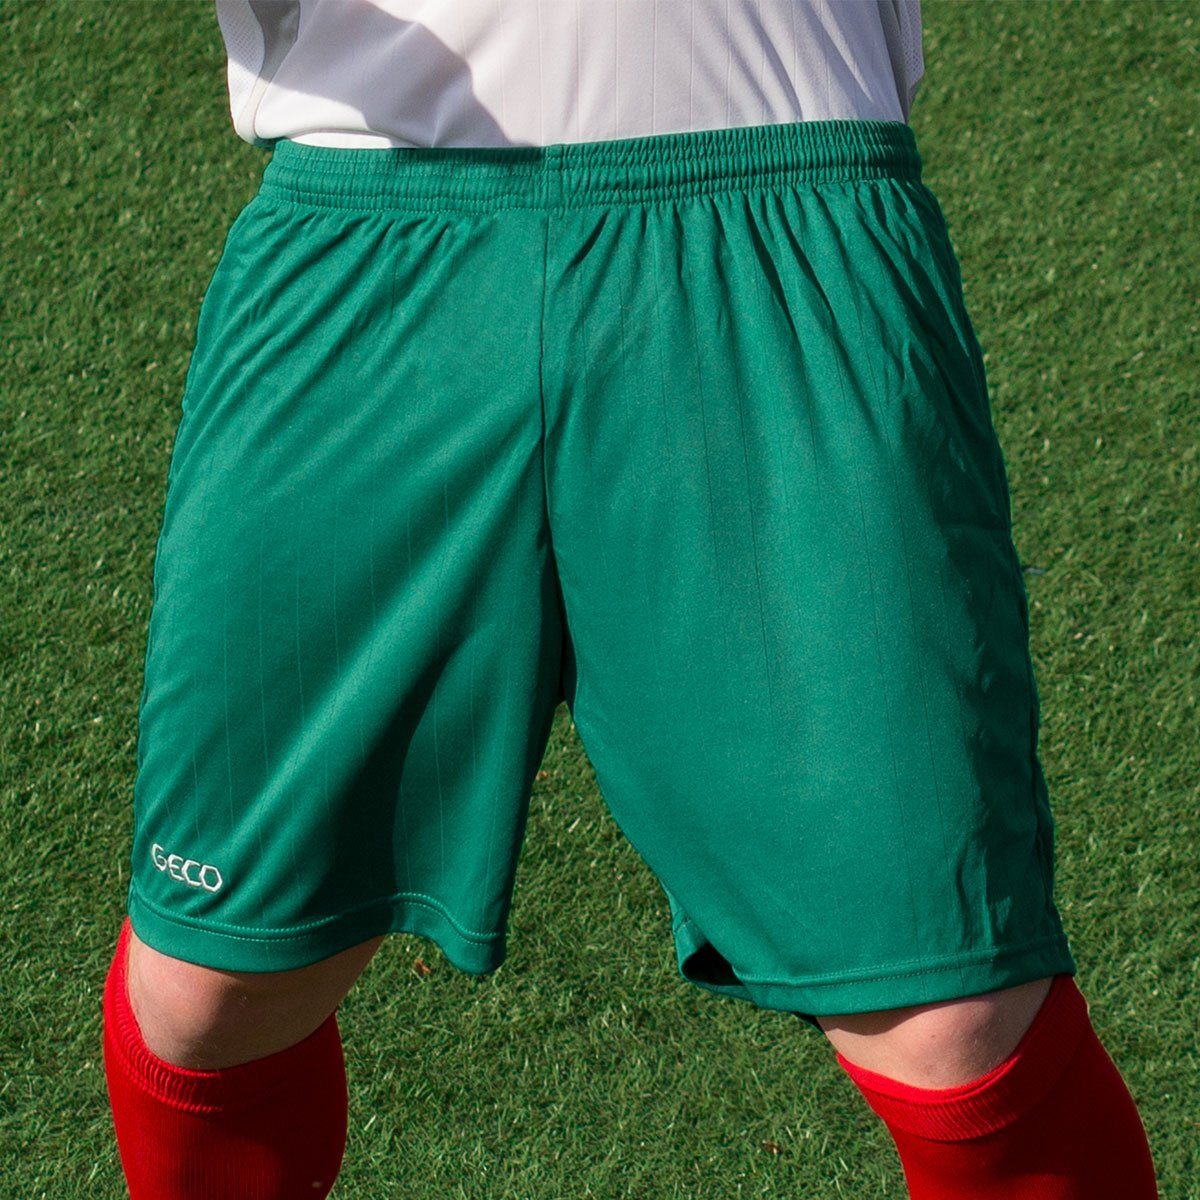 Trikothose Shorts Sportswear Fußballtrikot kurze Geco Fußballhose neutral grün Boreas